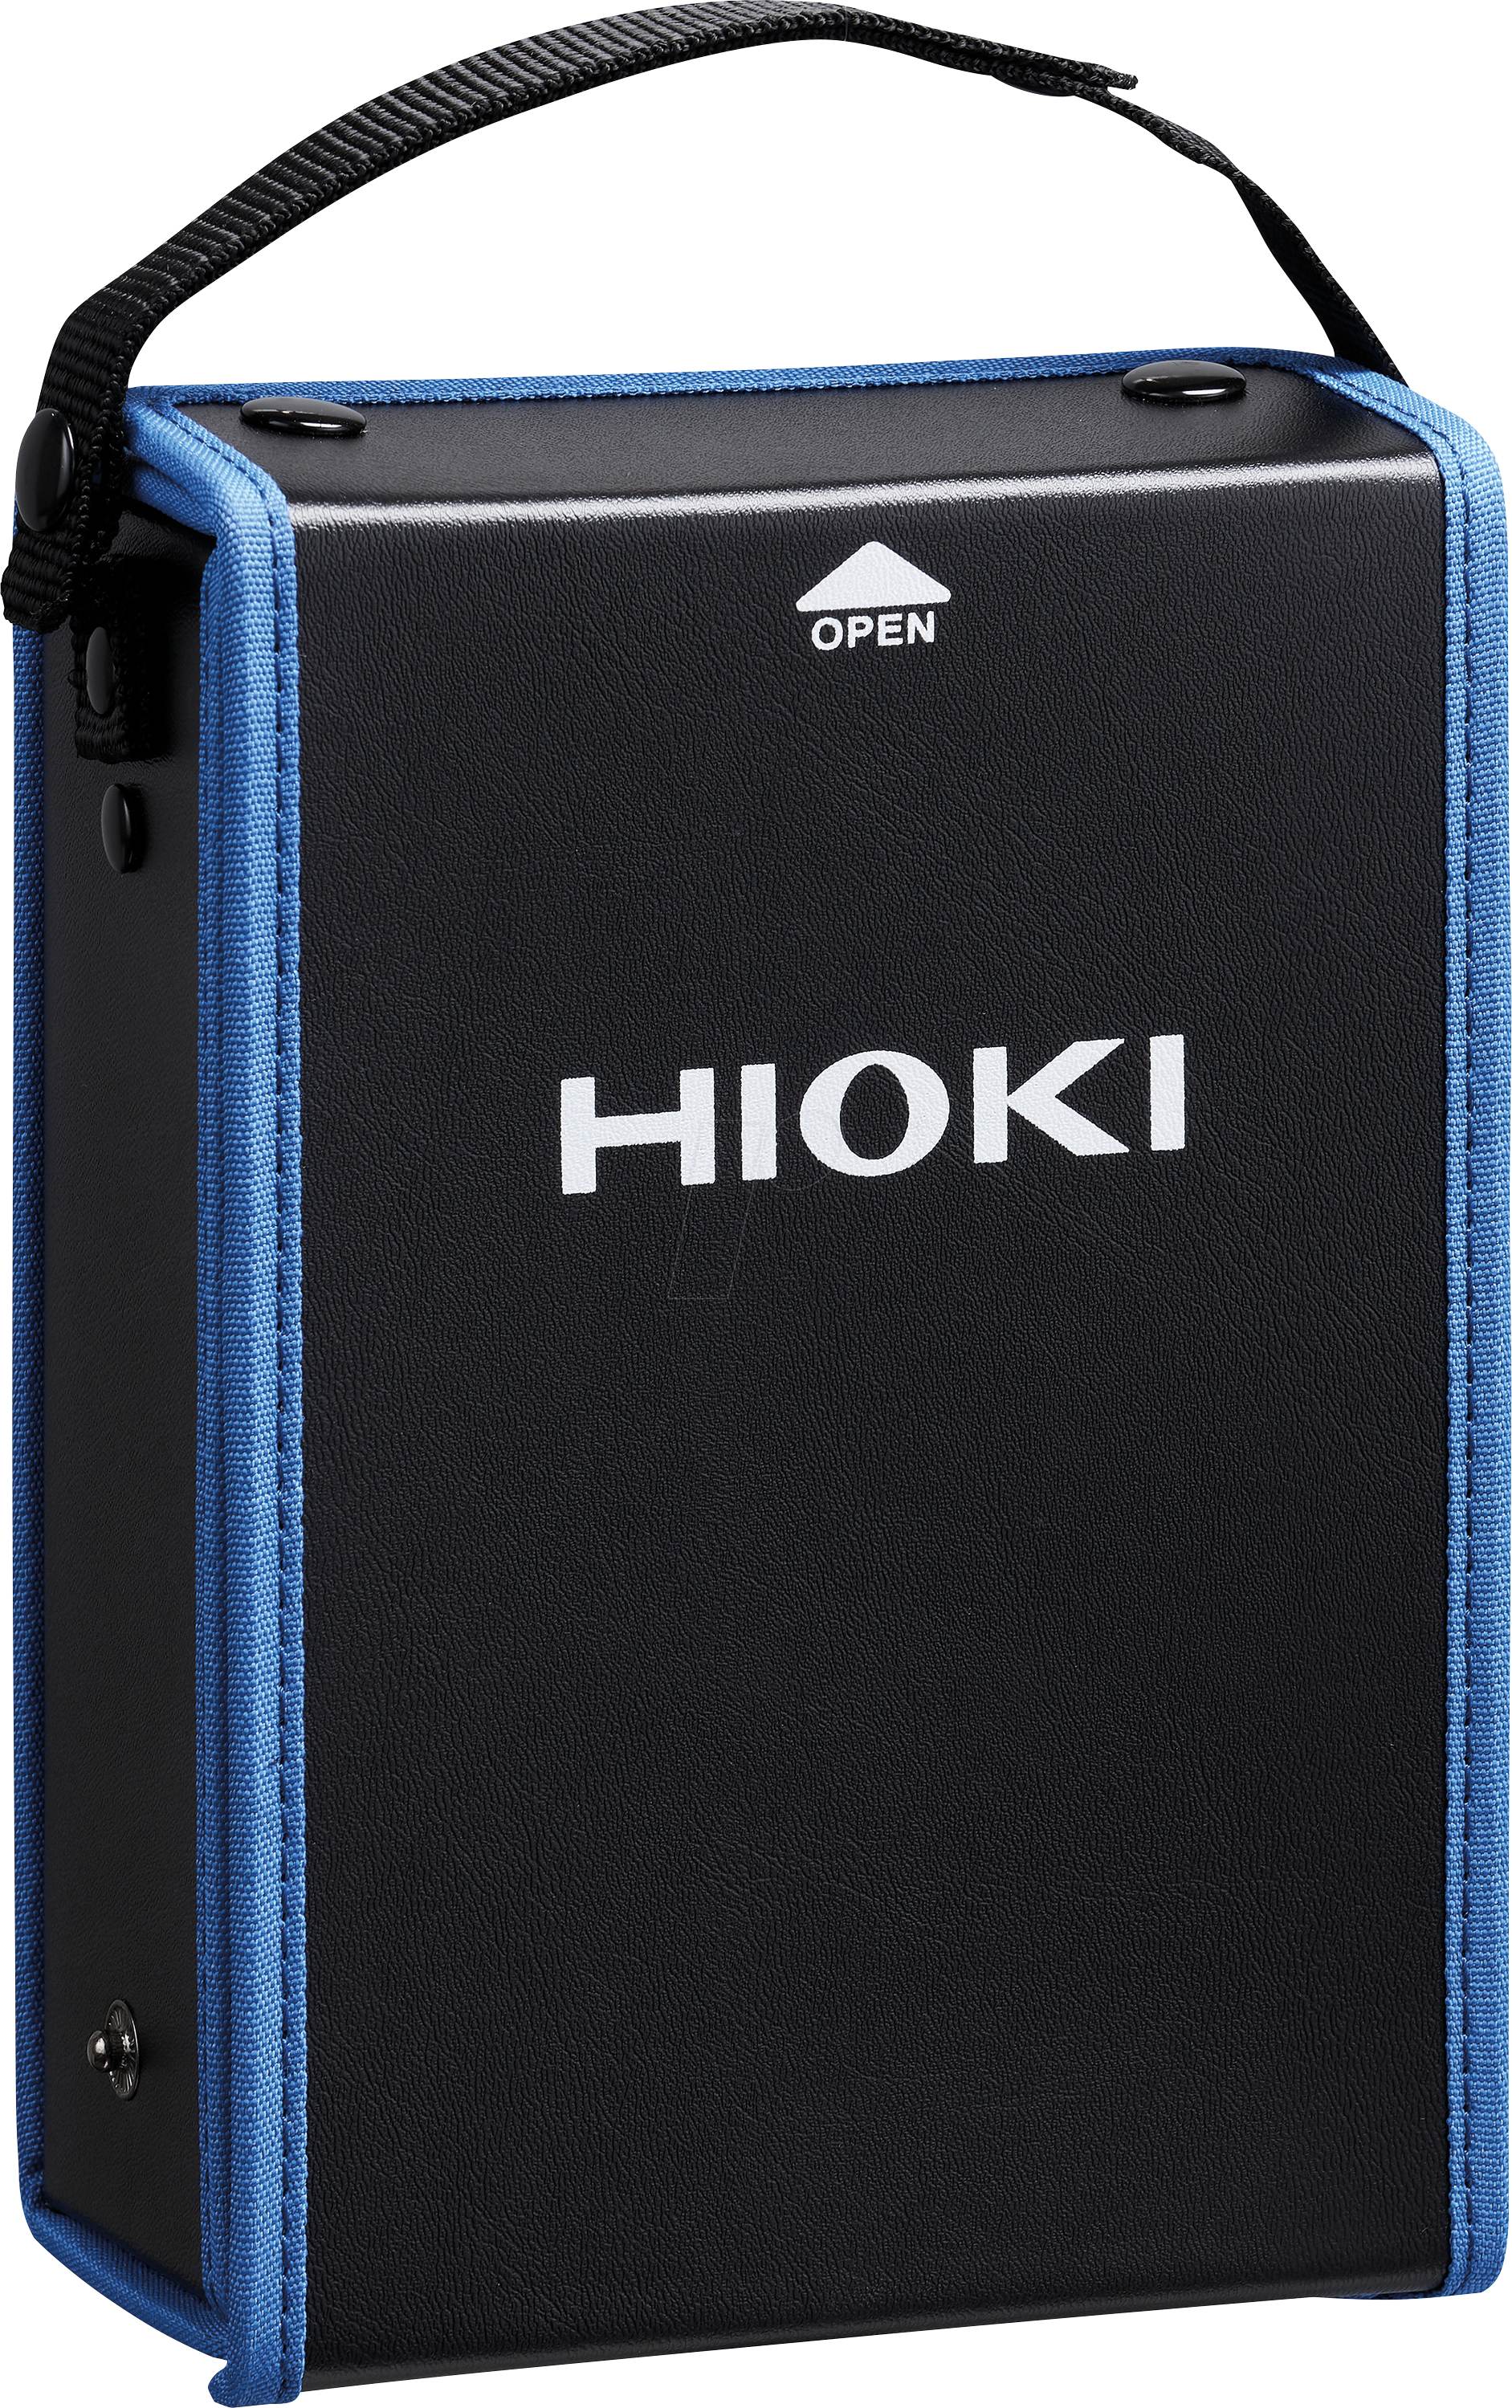 HIOKI C0201 - Feste Gerätetasche für HIOKI von HIOKI